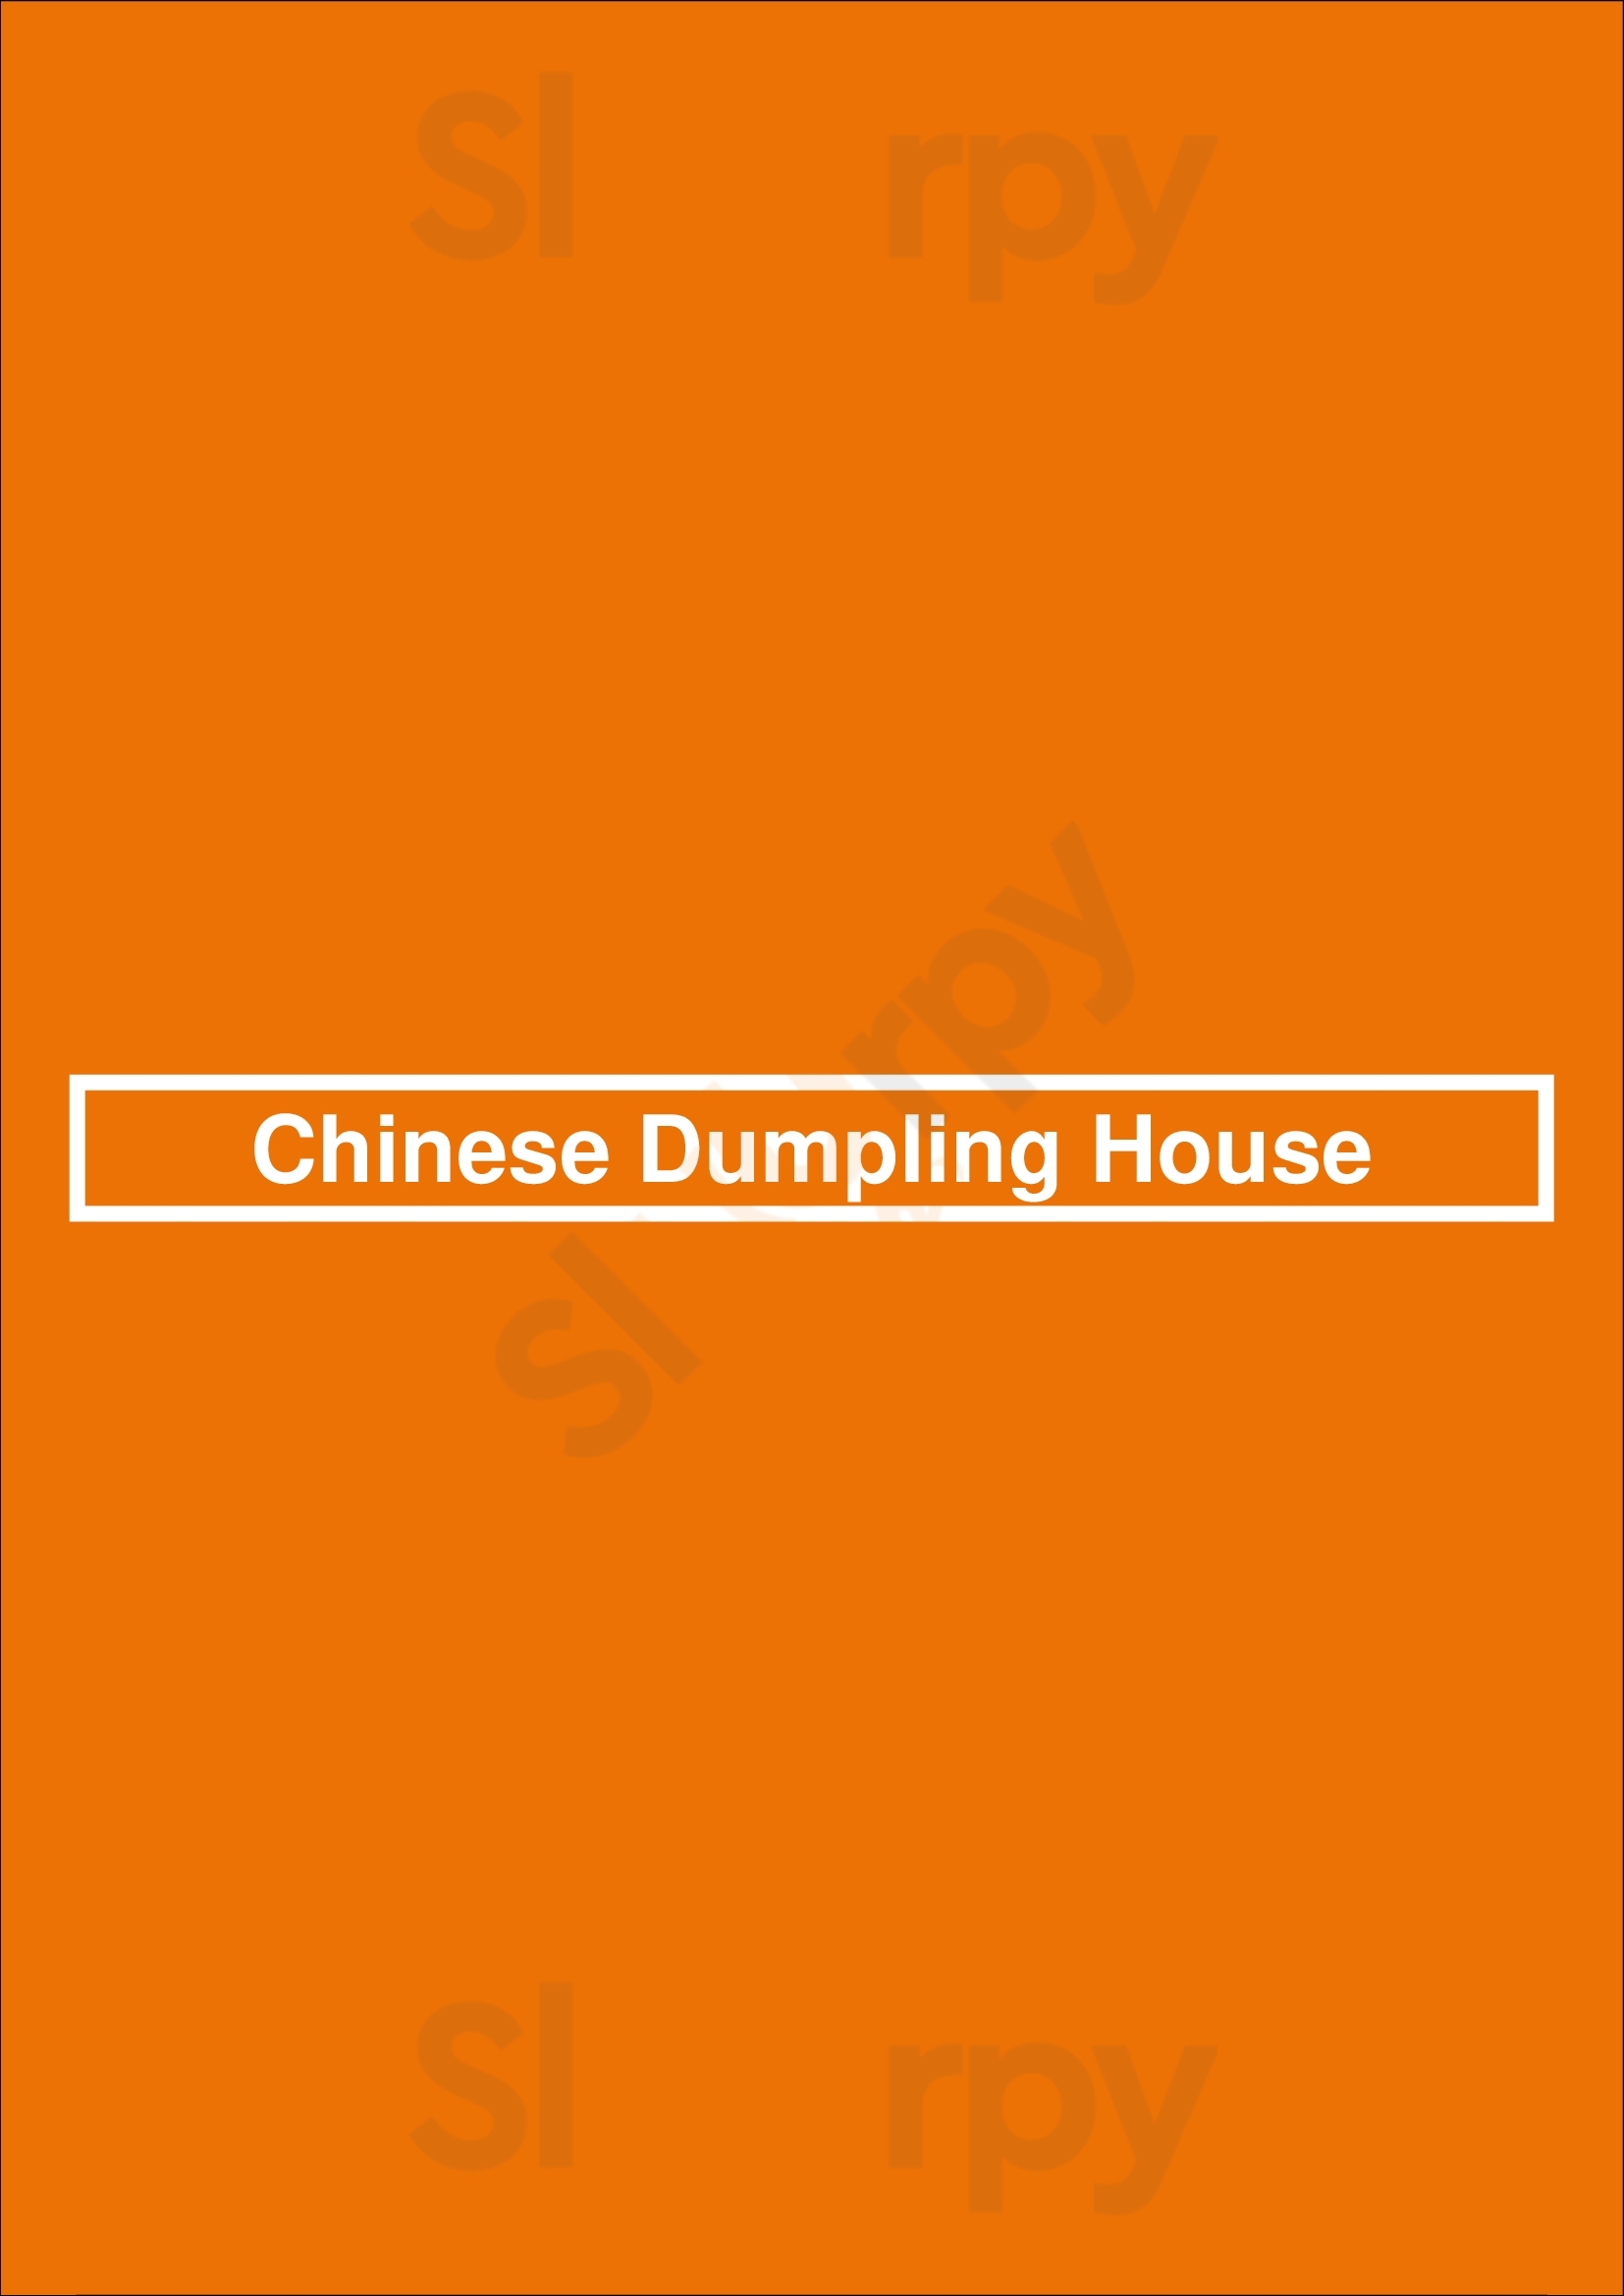 Chinese Dumpling House Markham Menu - 1